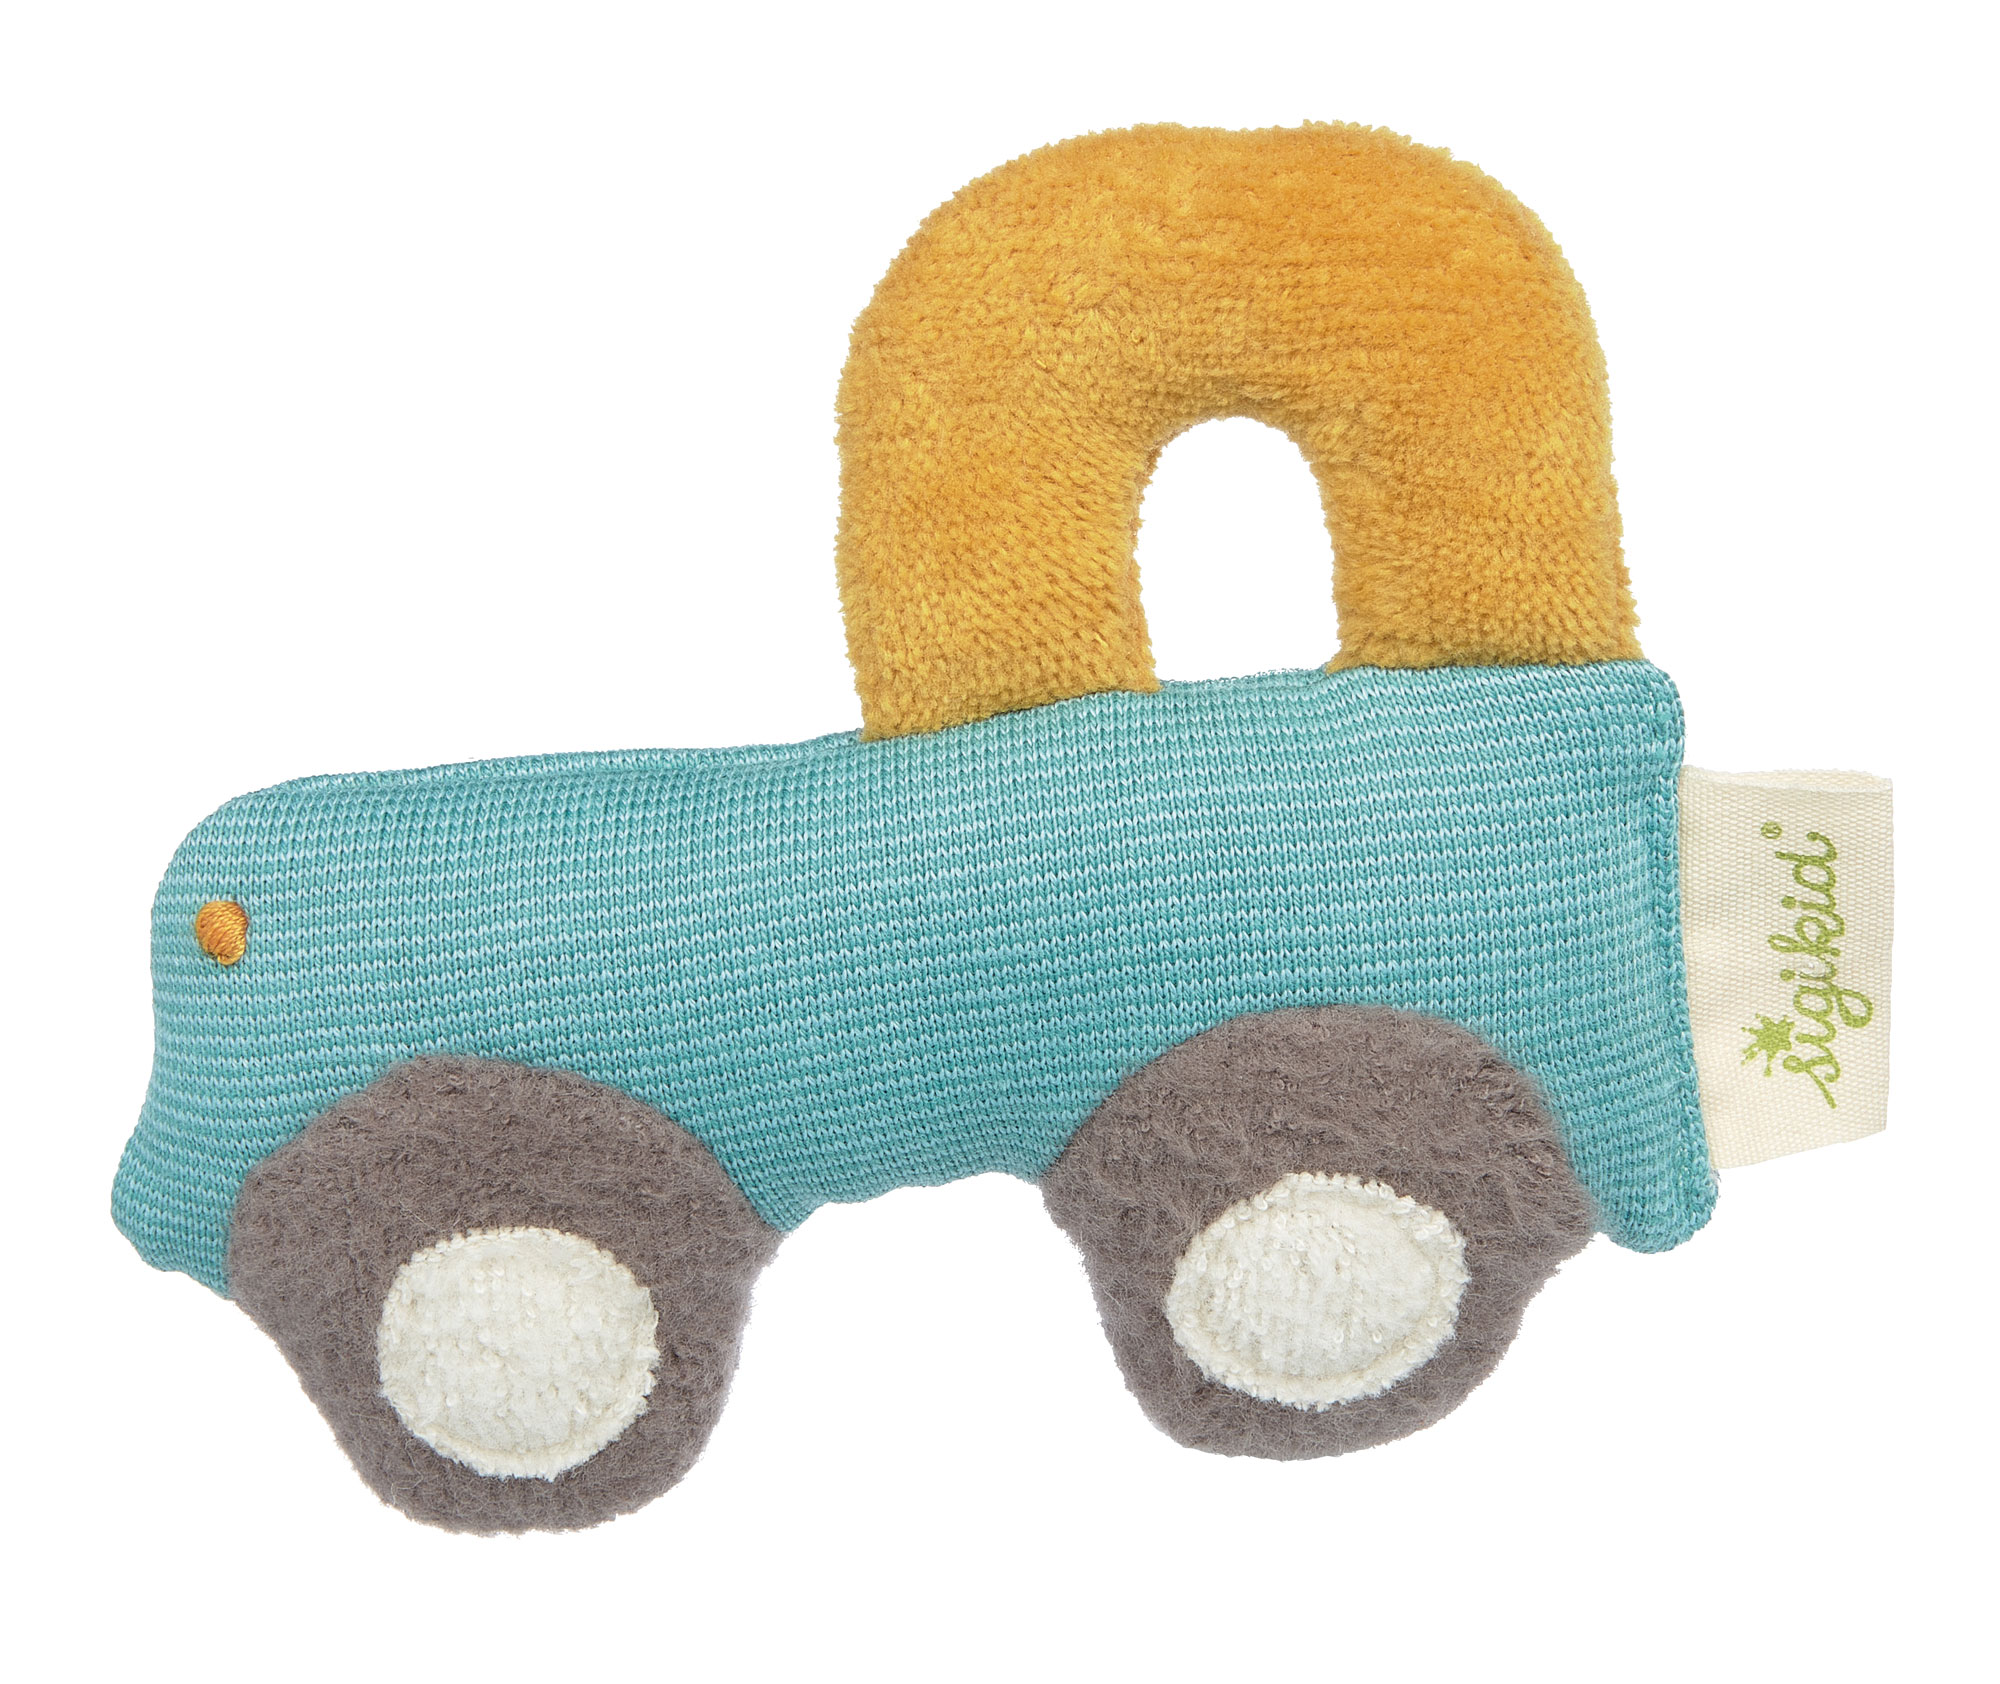 Soft baby grasp toy rattle car, organic